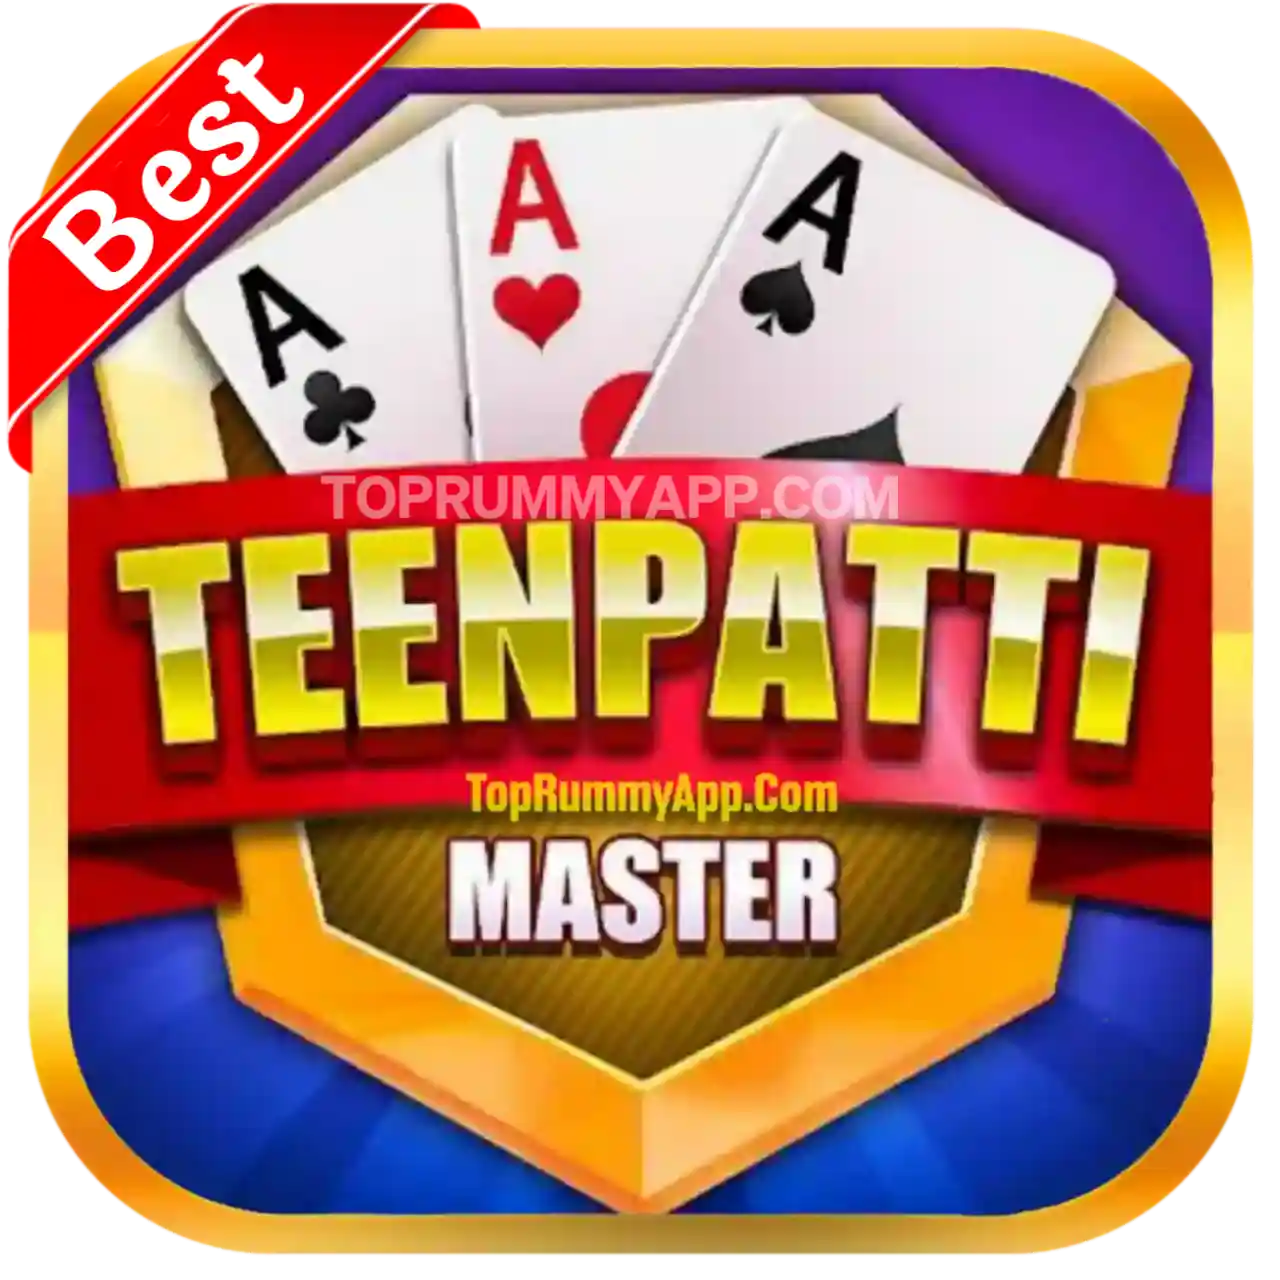 Teen Patti Master Apk Download - All Dragon Vs Tiger App List